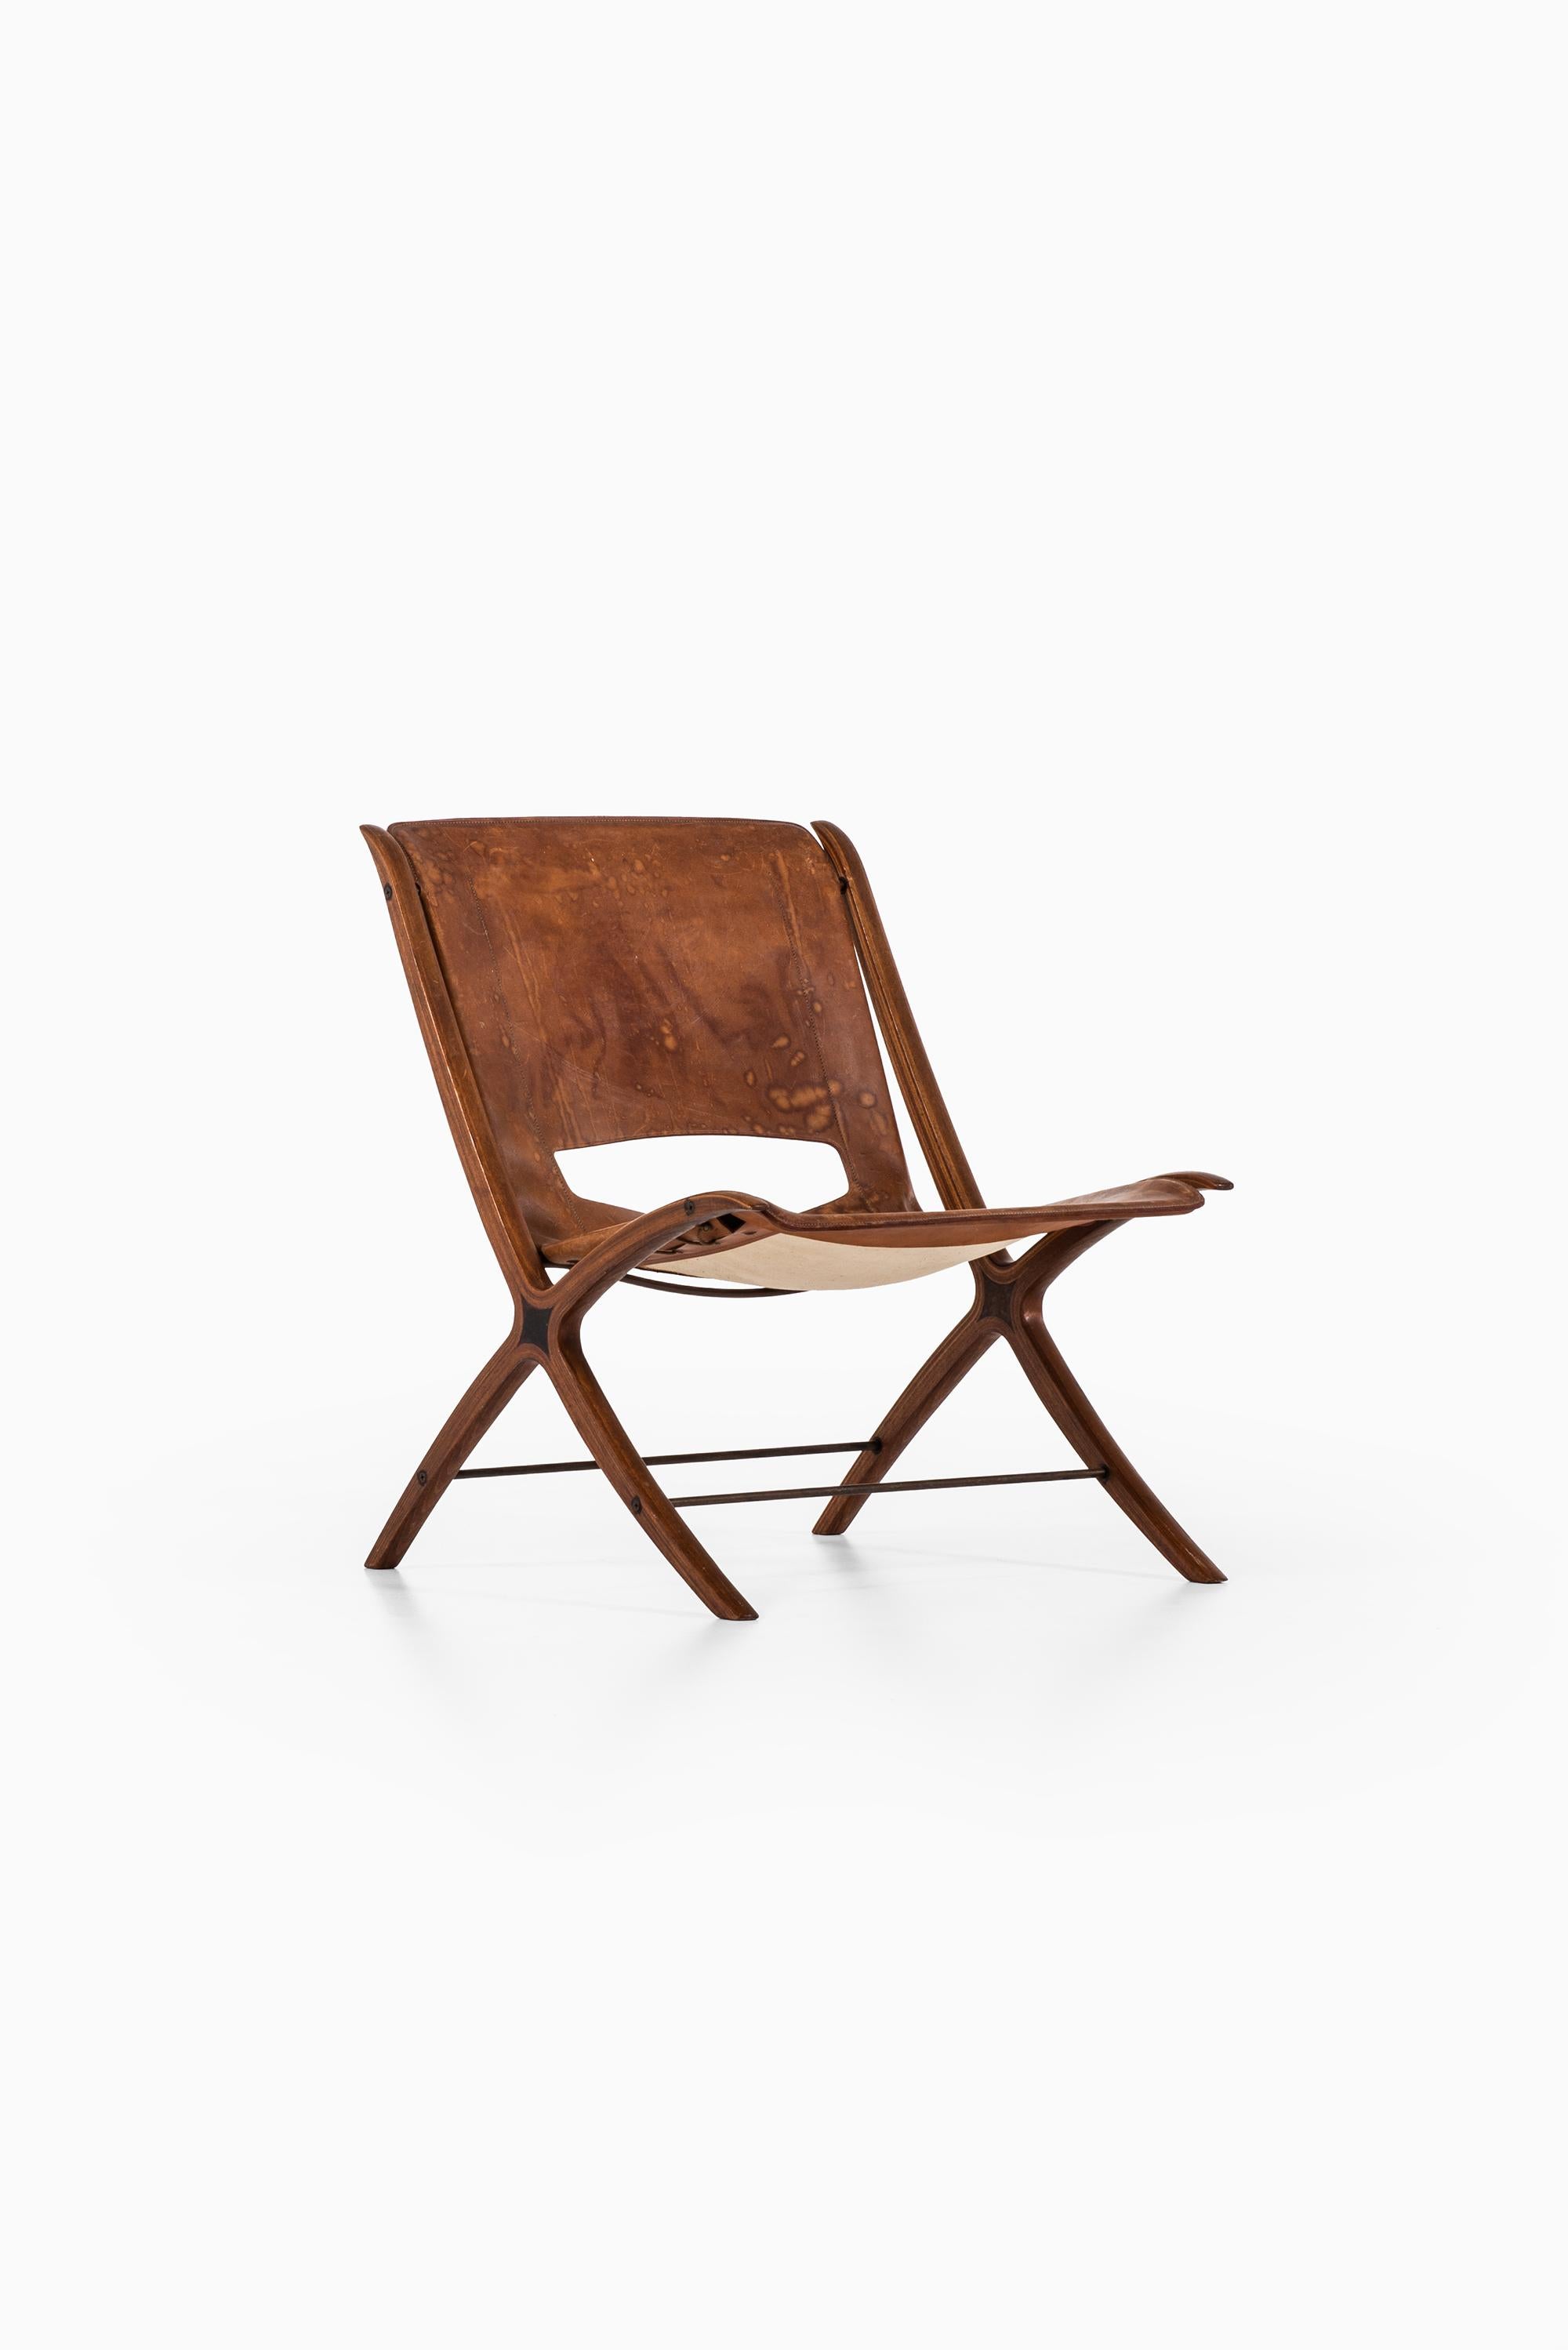 Peter Hvidt & Orla Mølgaard-Nielsen Sessel Modell Fh-6135 / X-Chair (Mitte des 20. Jahrhunderts) im Angebot